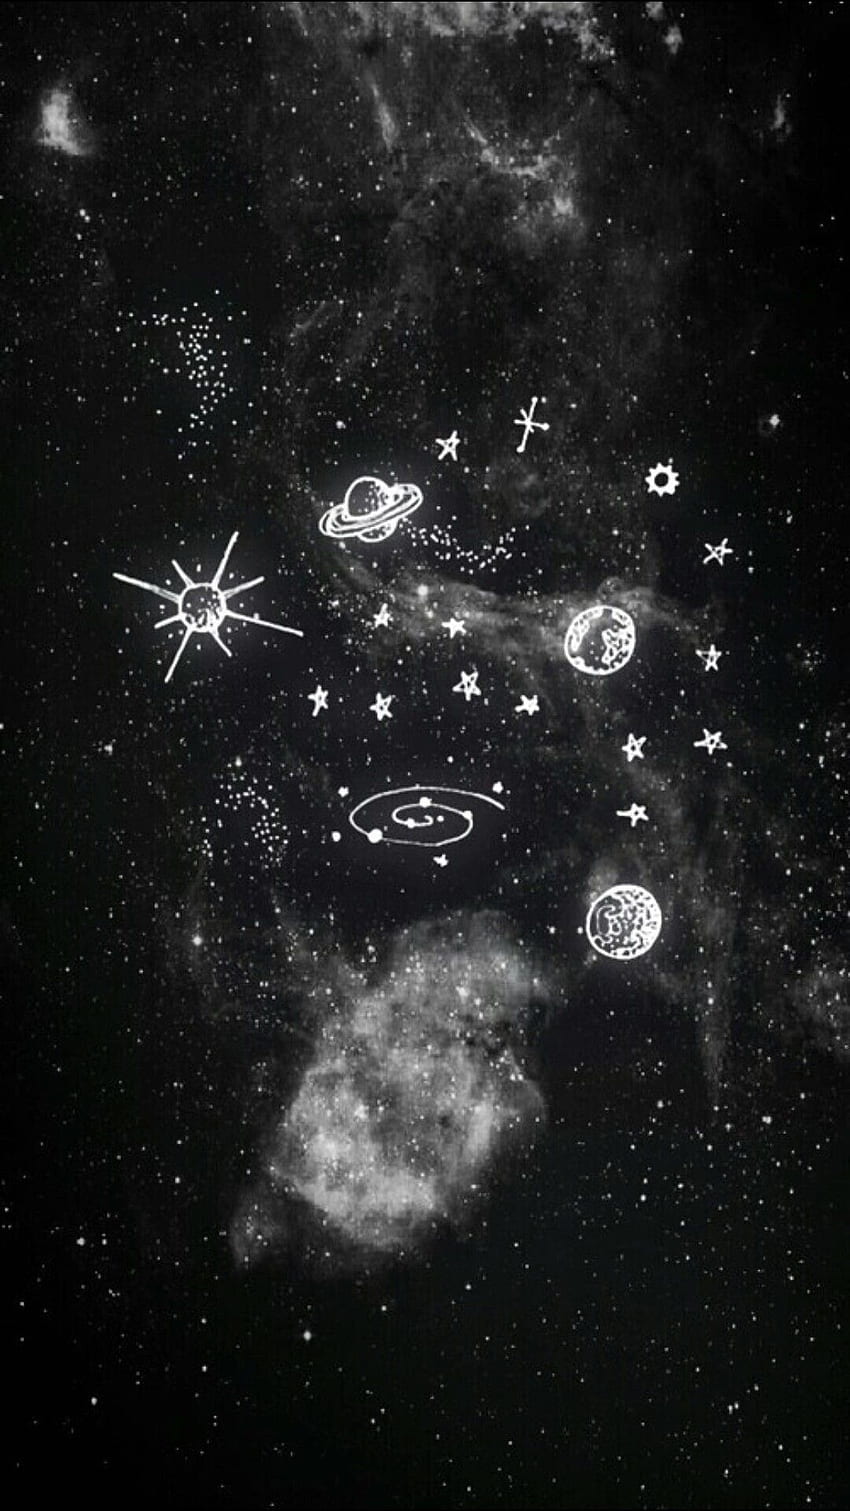 Objeto astronómico, Galaxia, Cielo, Espacio exterior, Espacio, Universo. Galaxy, teléfono, iPhone, estética del espacio exterior fondo de pantalla del teléfono